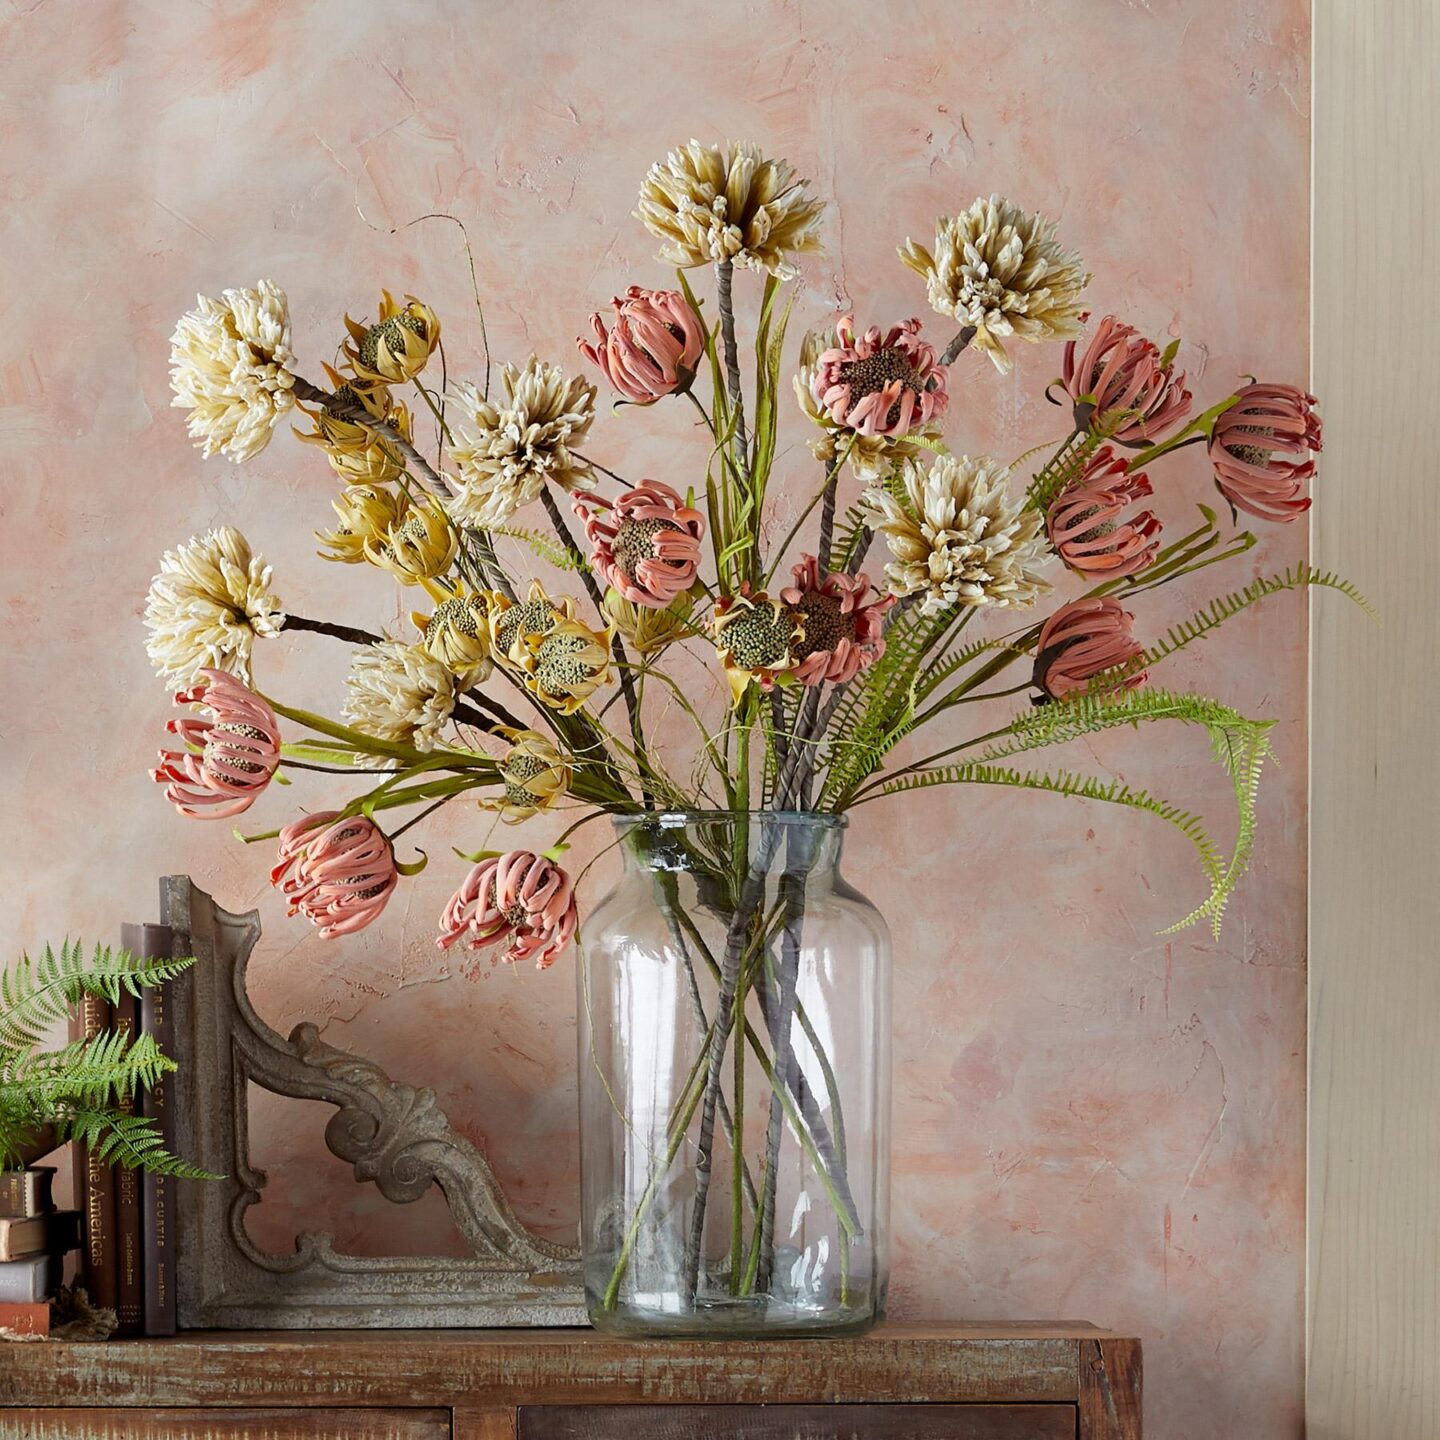 Everlasting Handpainted botanicals in pretty dusty pink and cream - Sundance catalog.